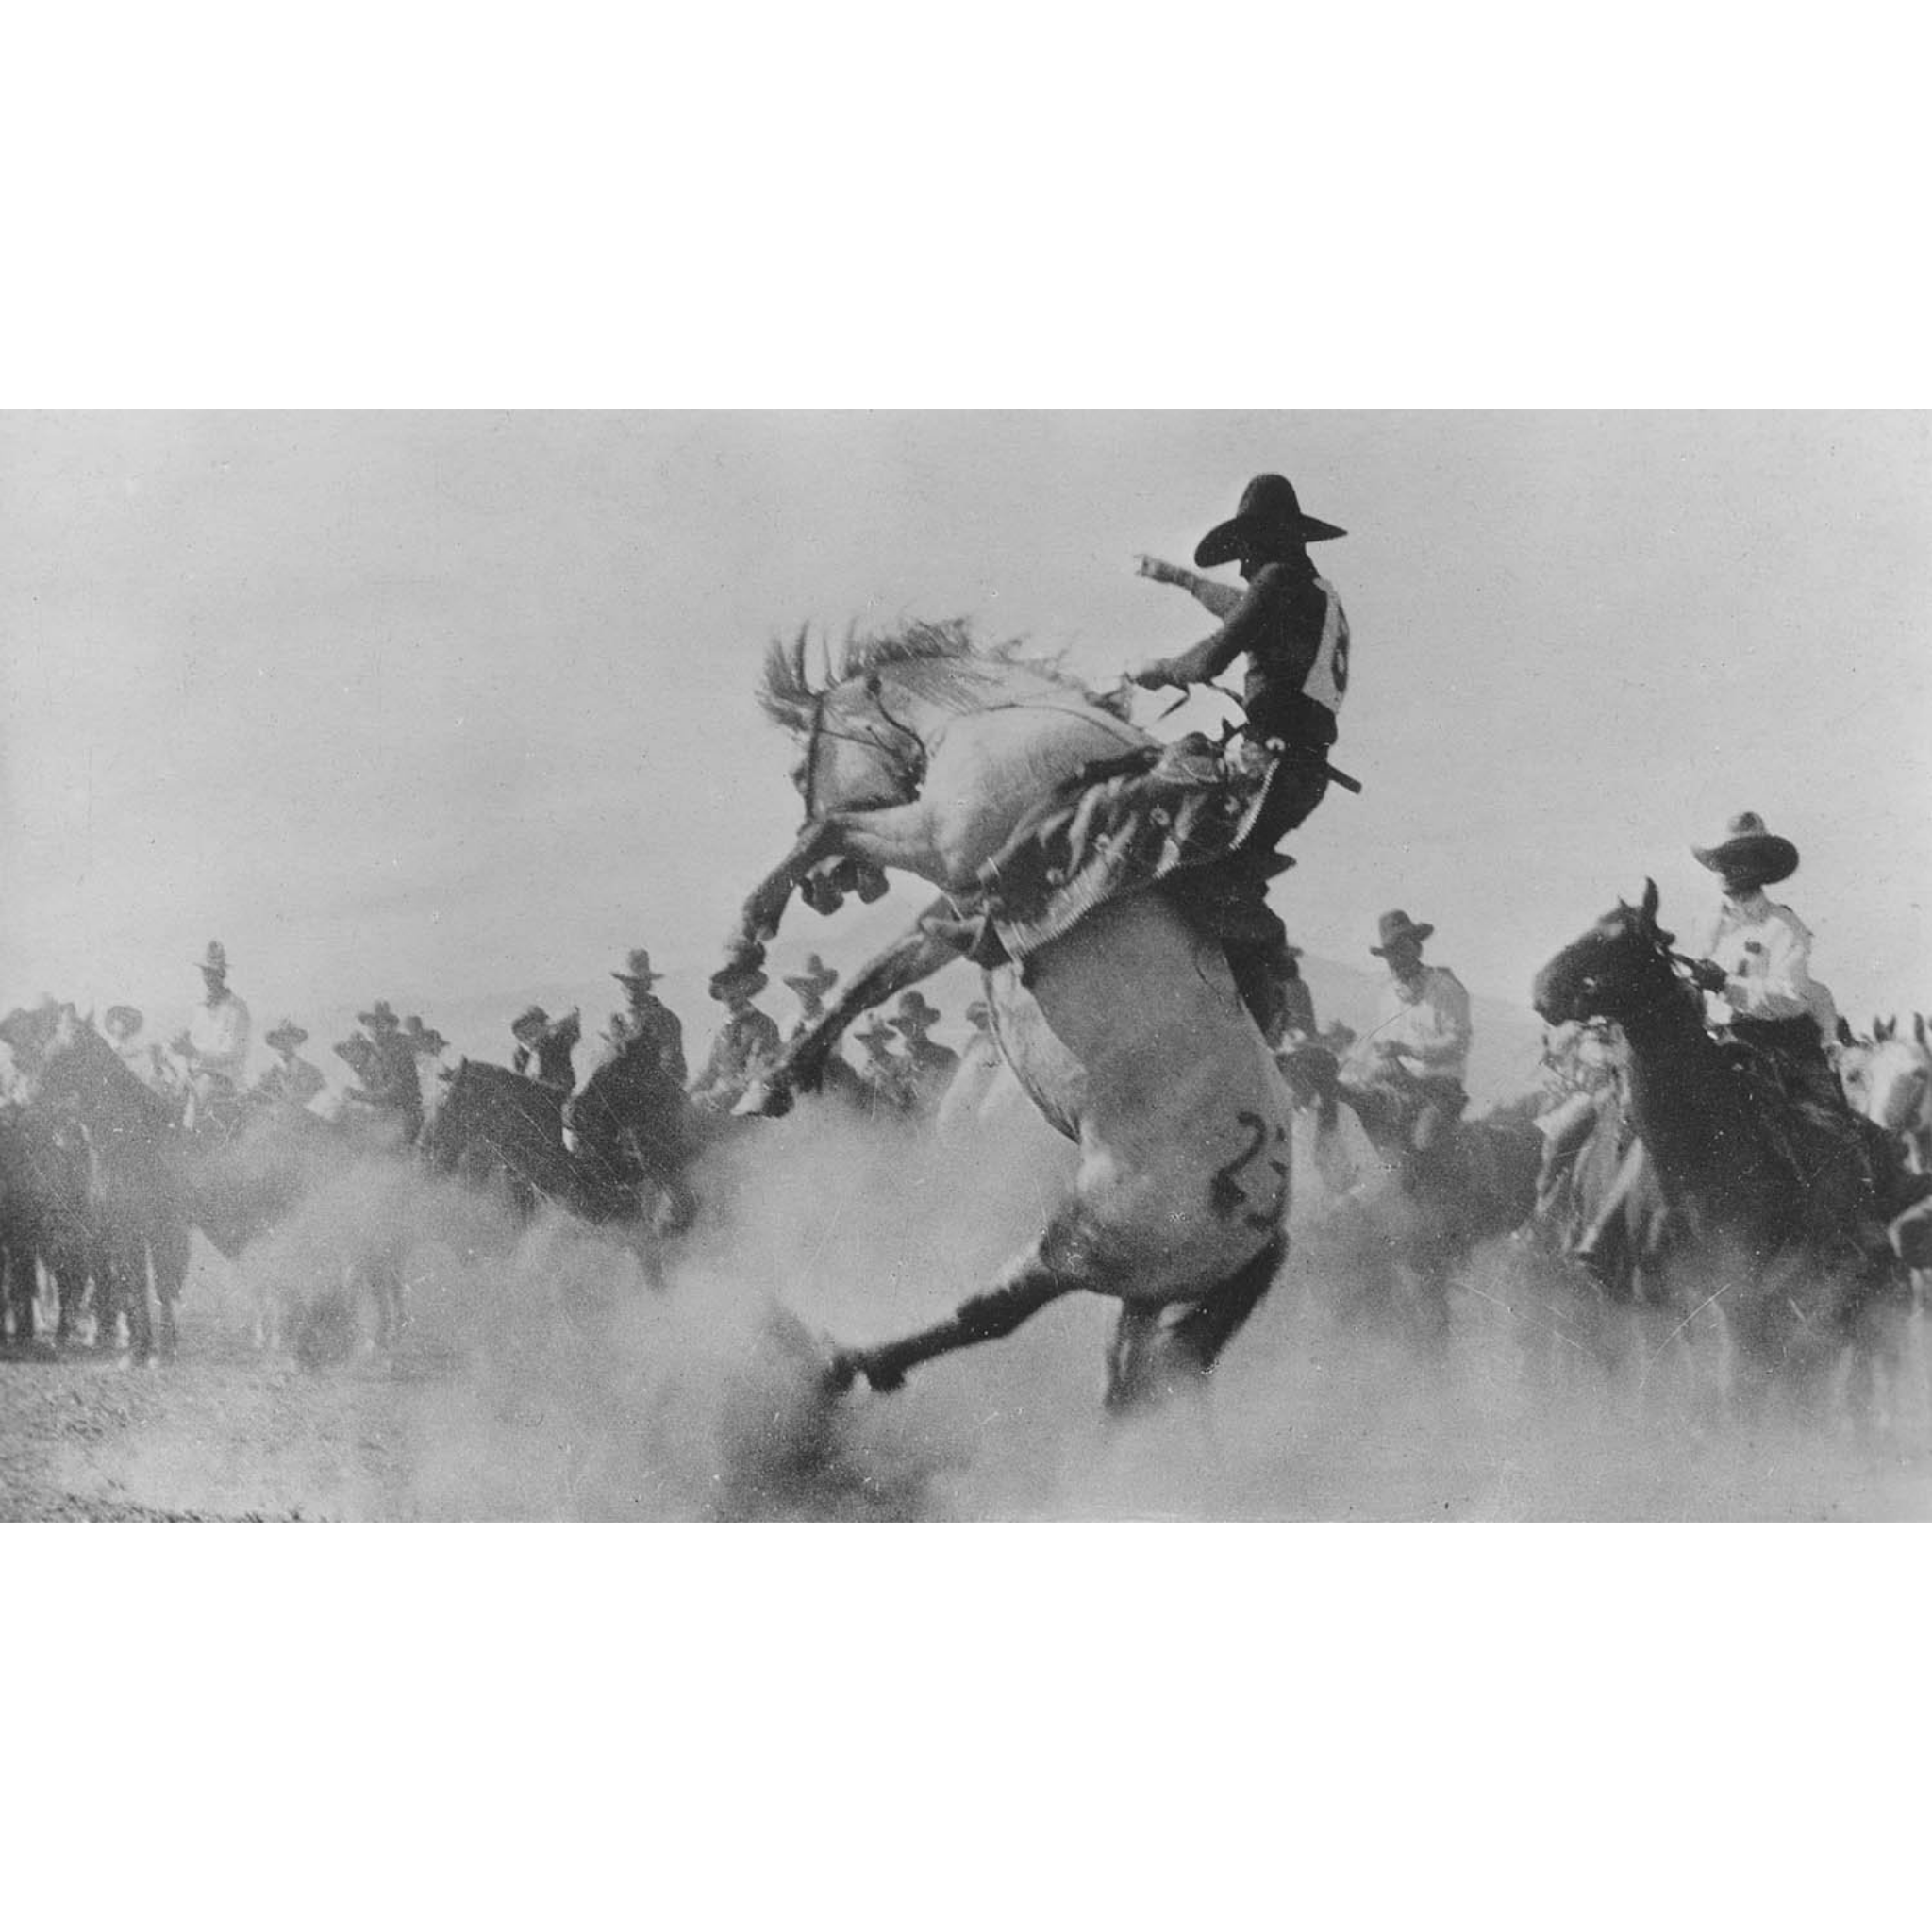 Rodeo Cowboys 4 - Cowboy on Bucking Bronco - ca. 1916 Photograph